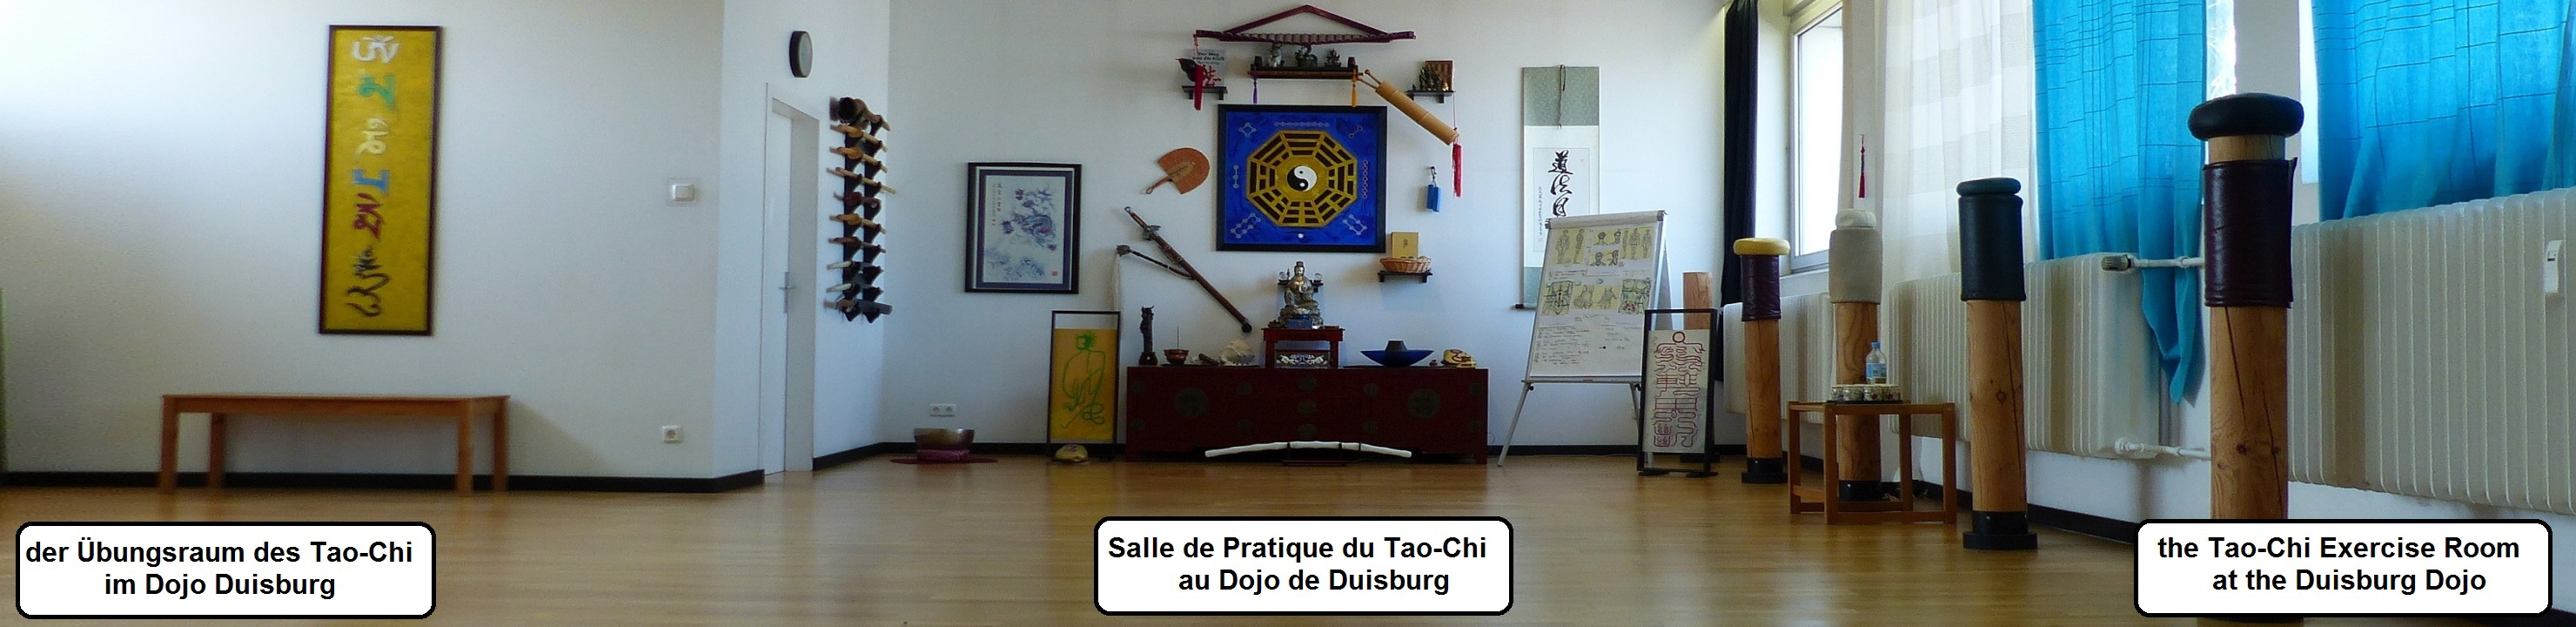 Tao-Chi Duisburg, Übungsraum des Dojo 2022-Maerz-21 (1220259) 2960x720 TxT